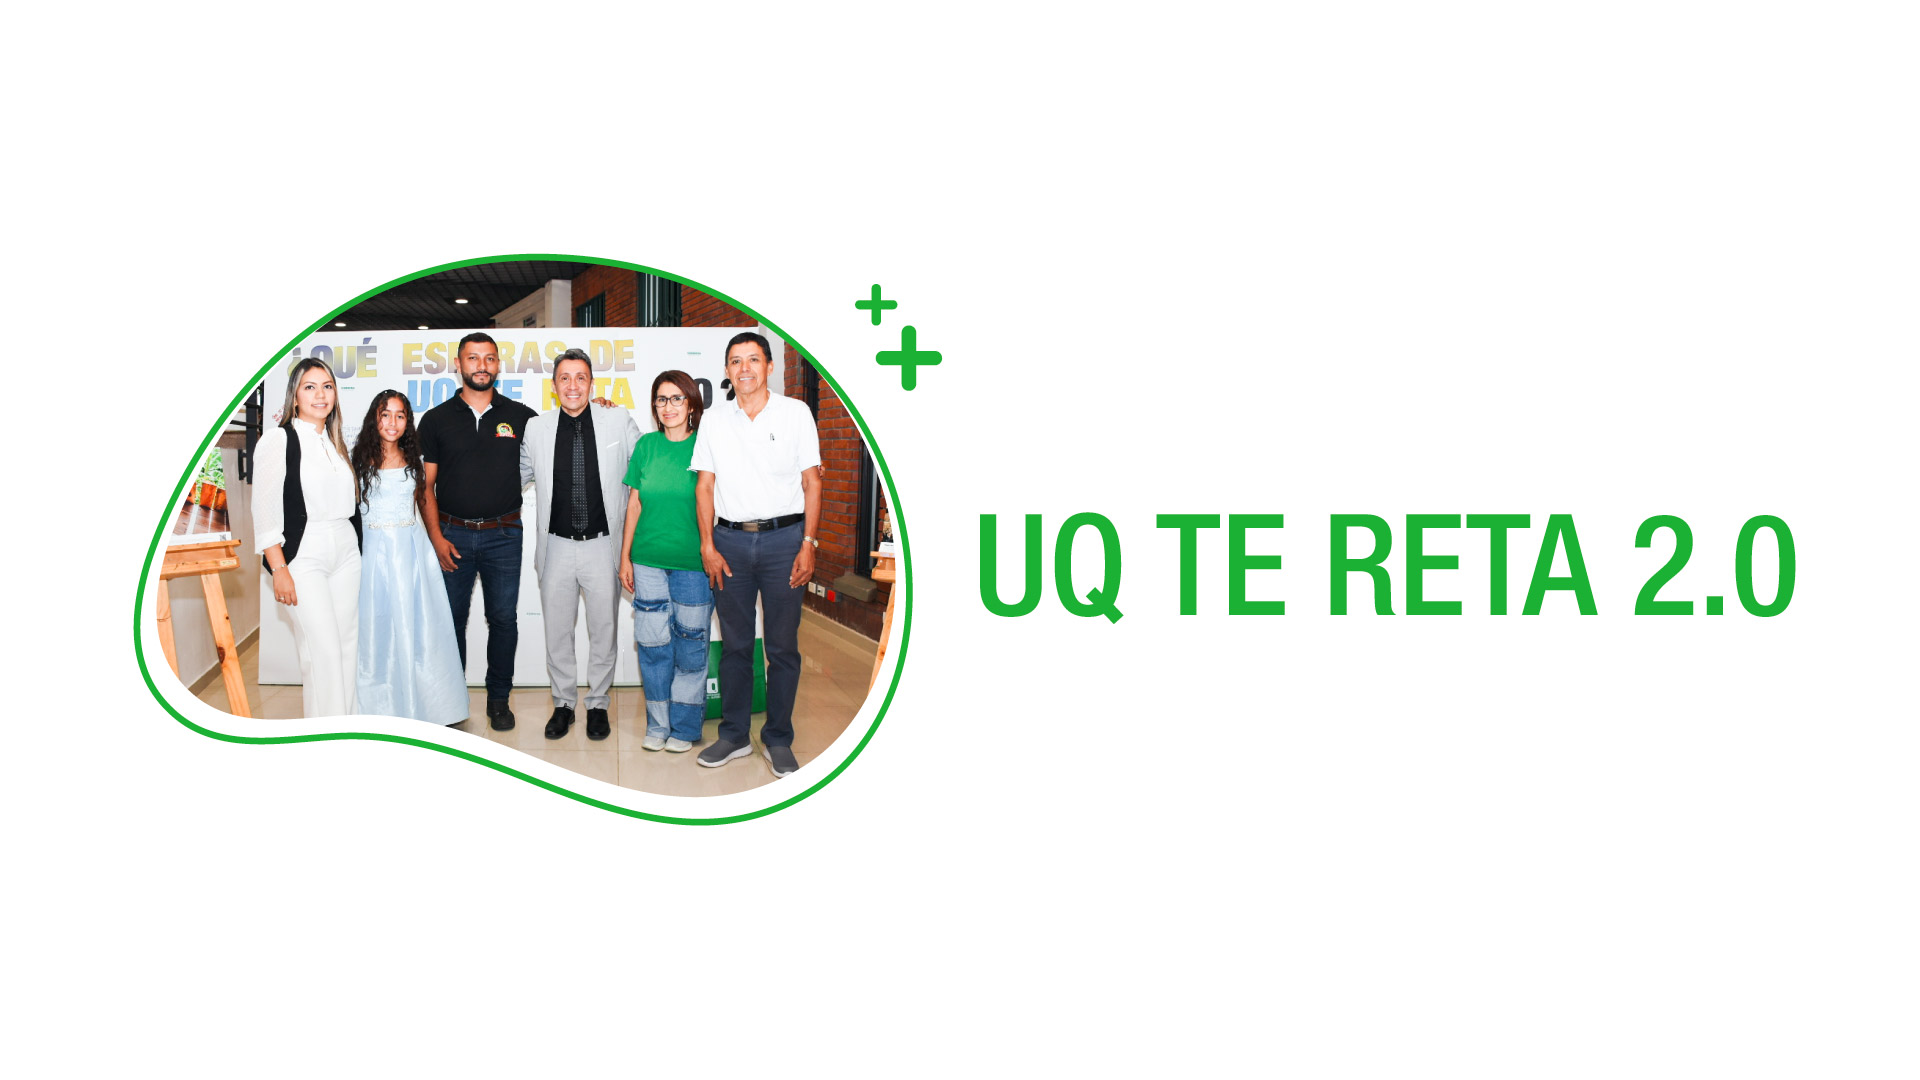 Innovación que transforma: Lanzamiento de UQ Te Reta 2.0